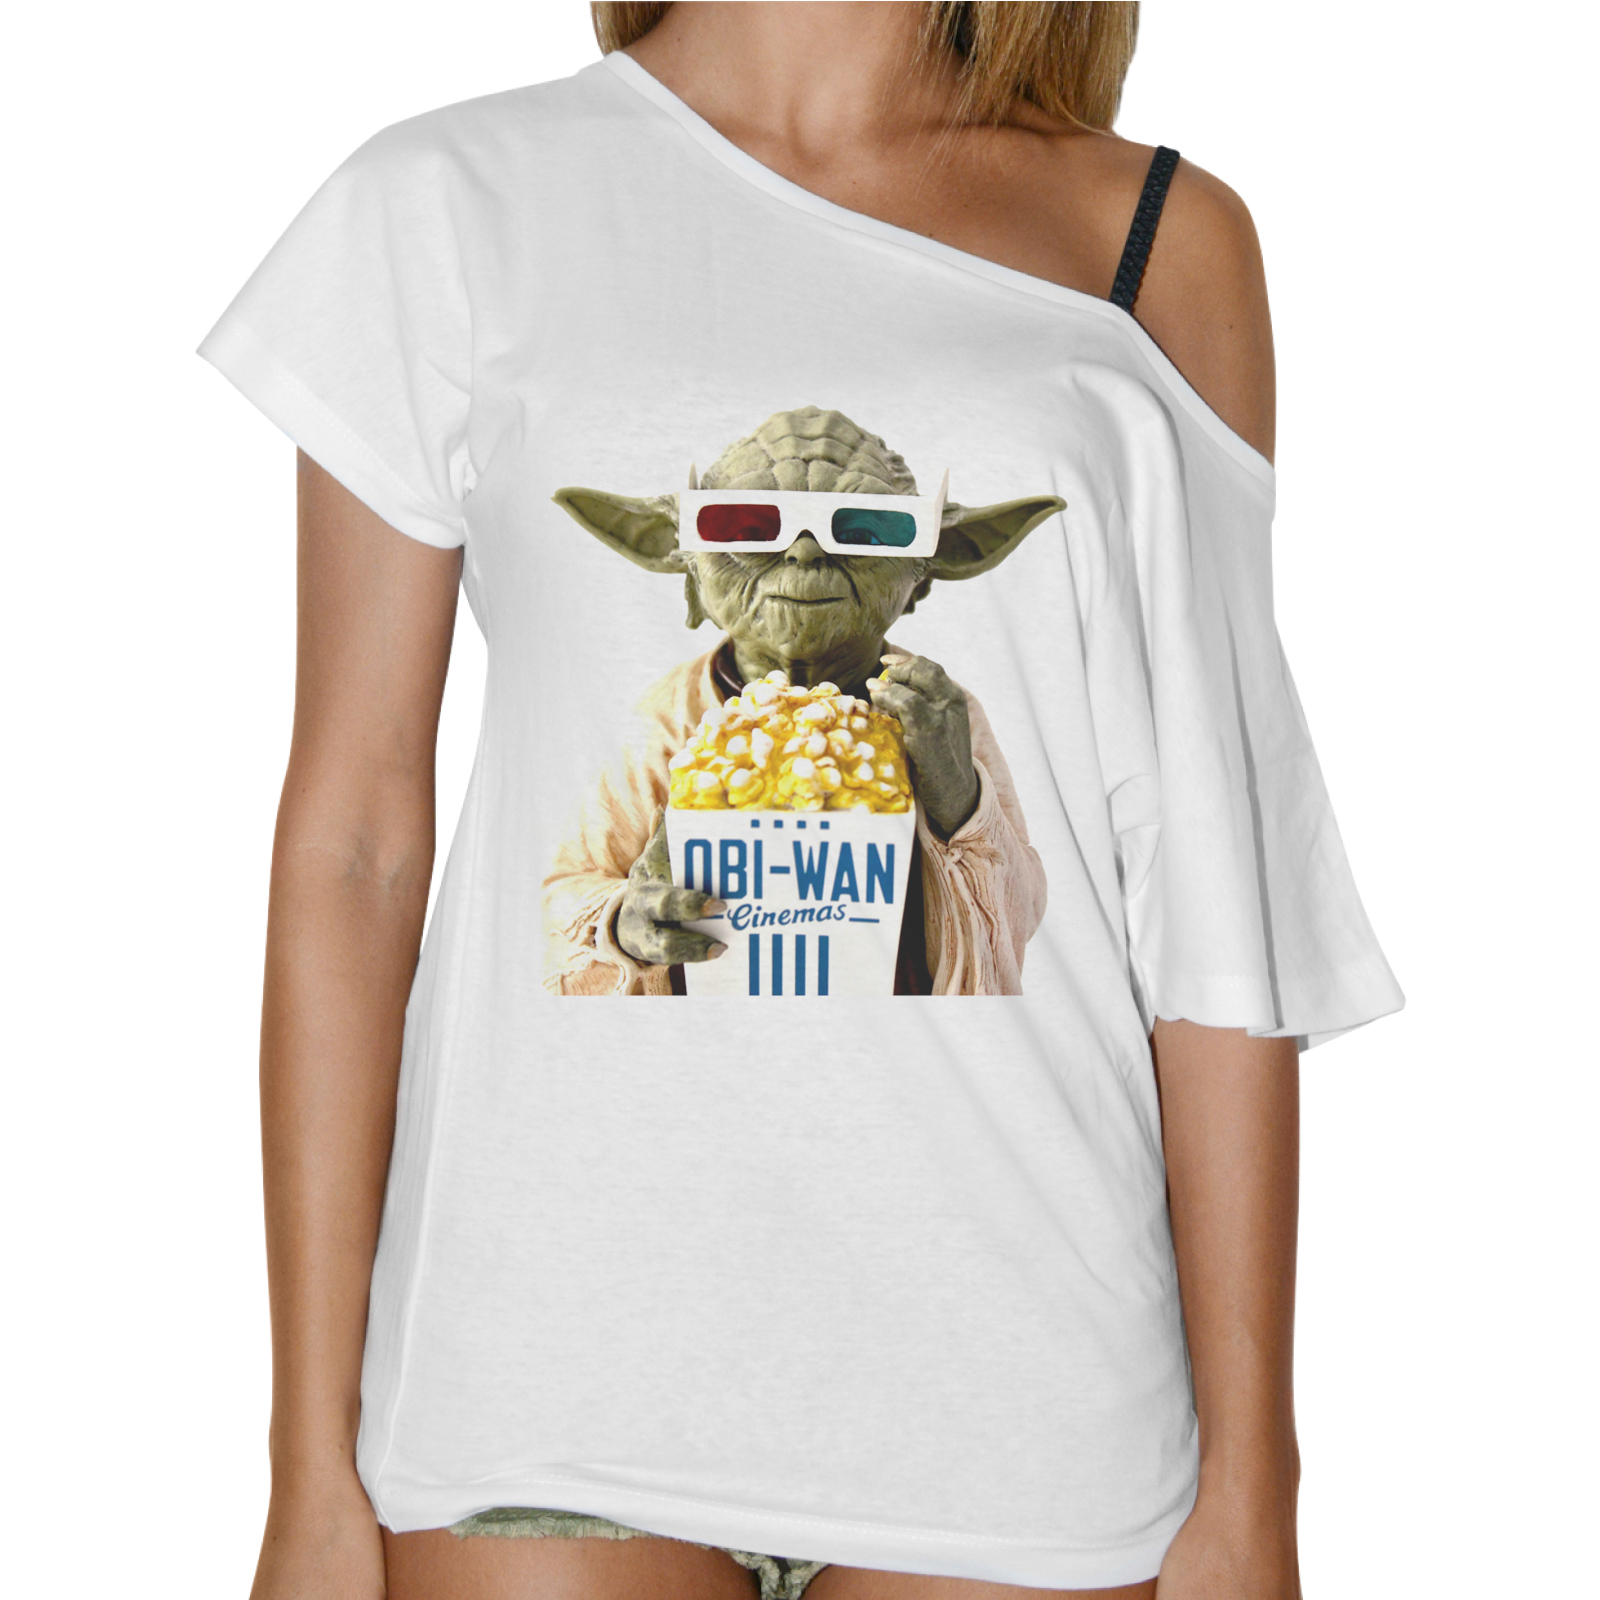 T-Shirt Donna Collo Barca OBI POP CORN